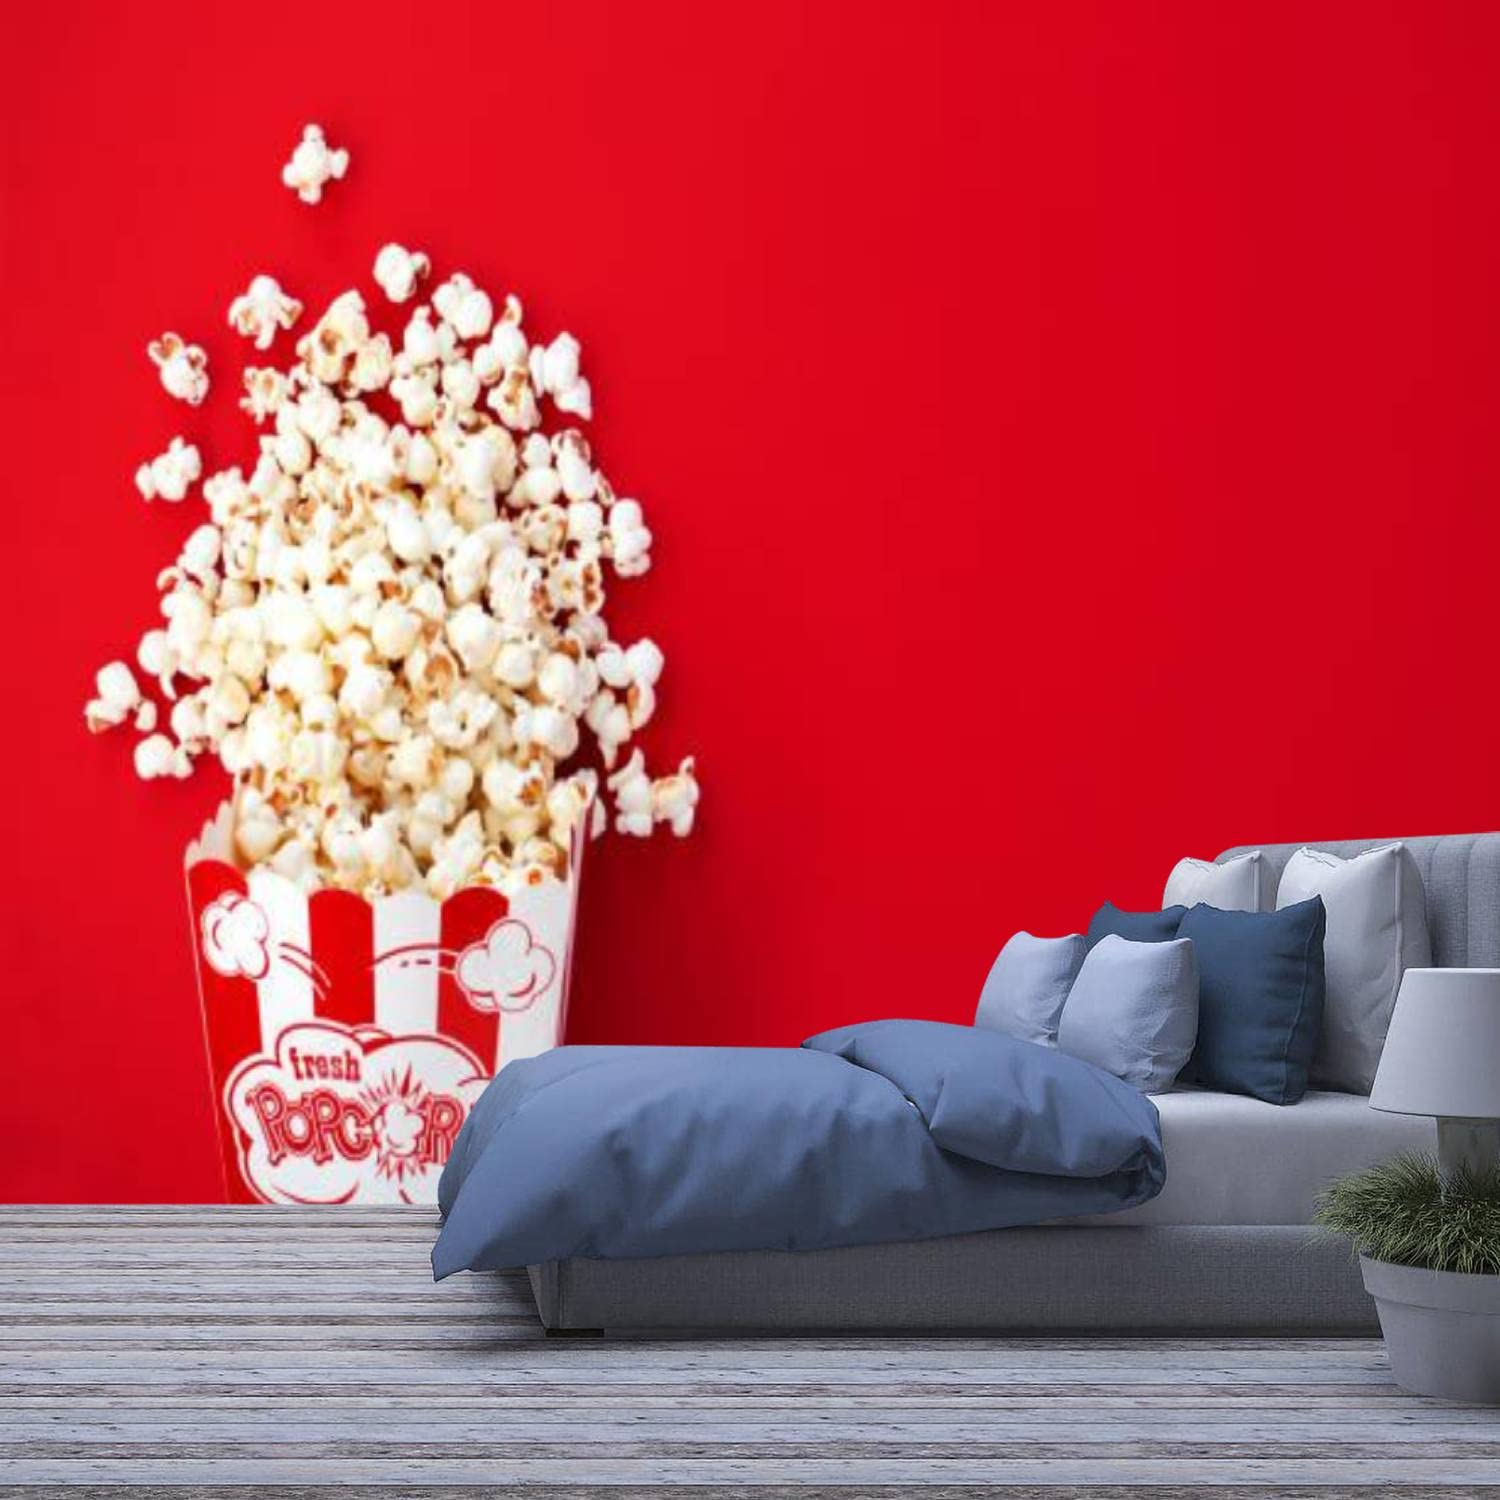 Popcorn Wallpapers